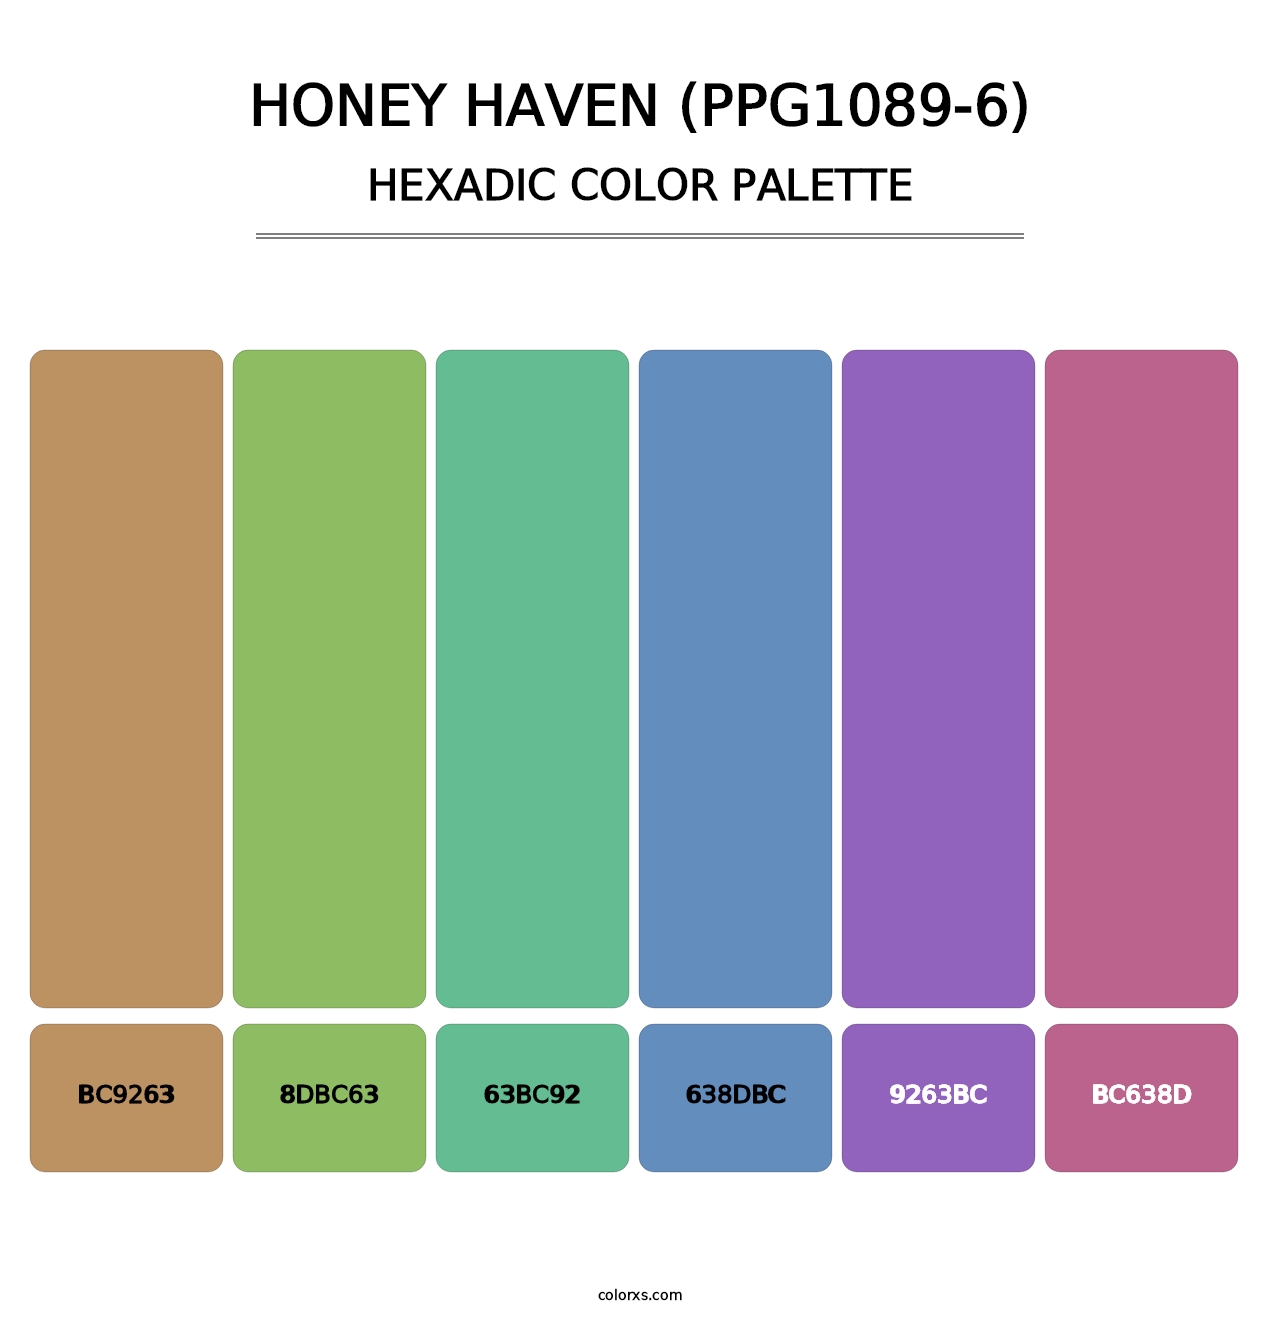 Honey Haven (PPG1089-6) - Hexadic Color Palette